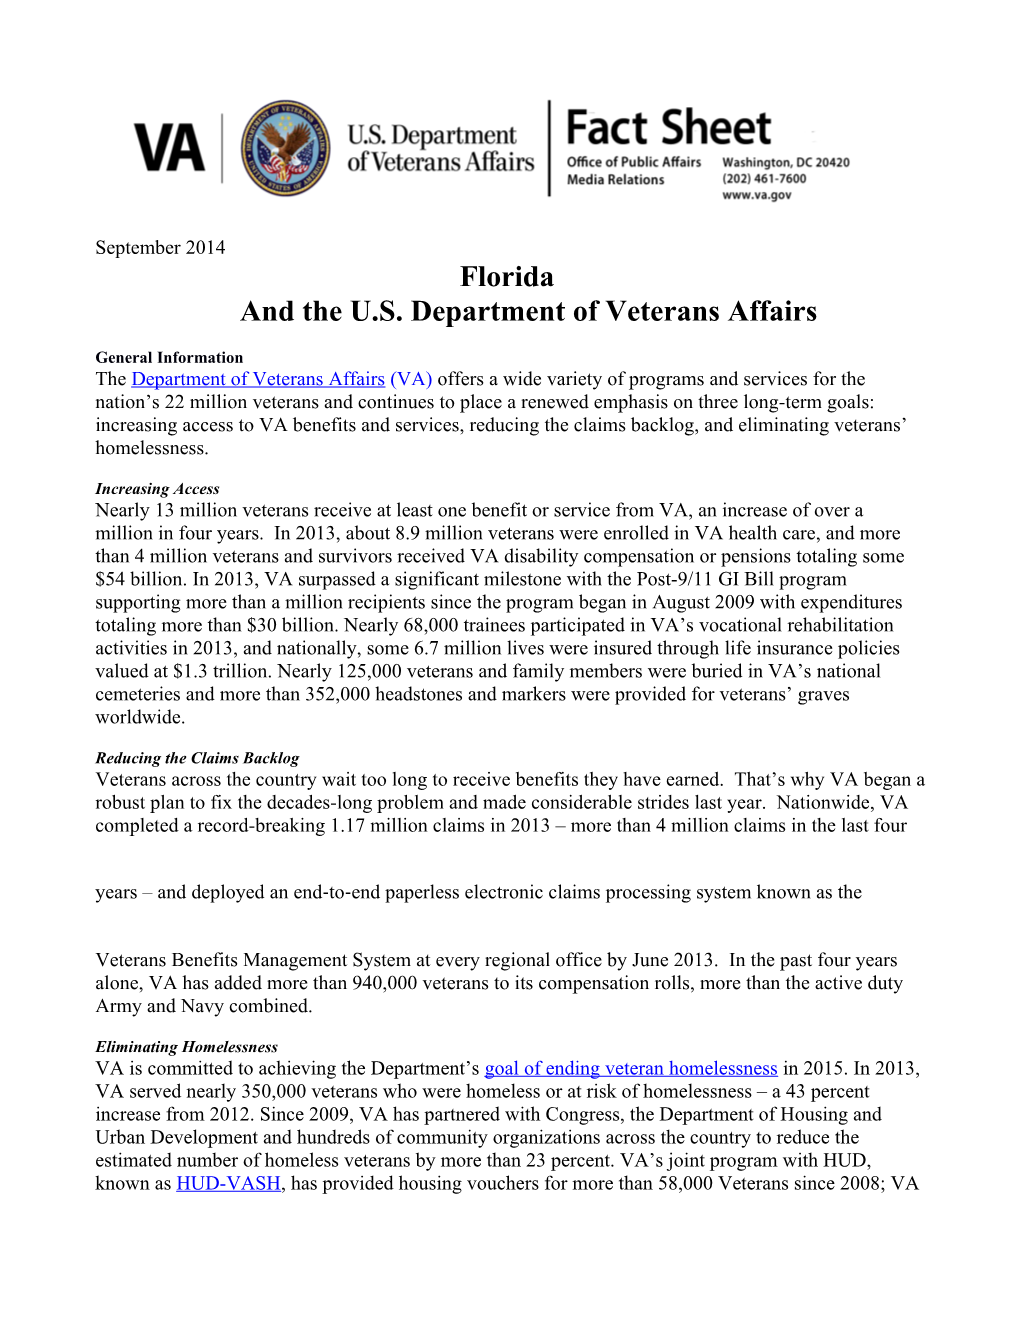 Floridaand the U.S. Department of Veterans Affairs